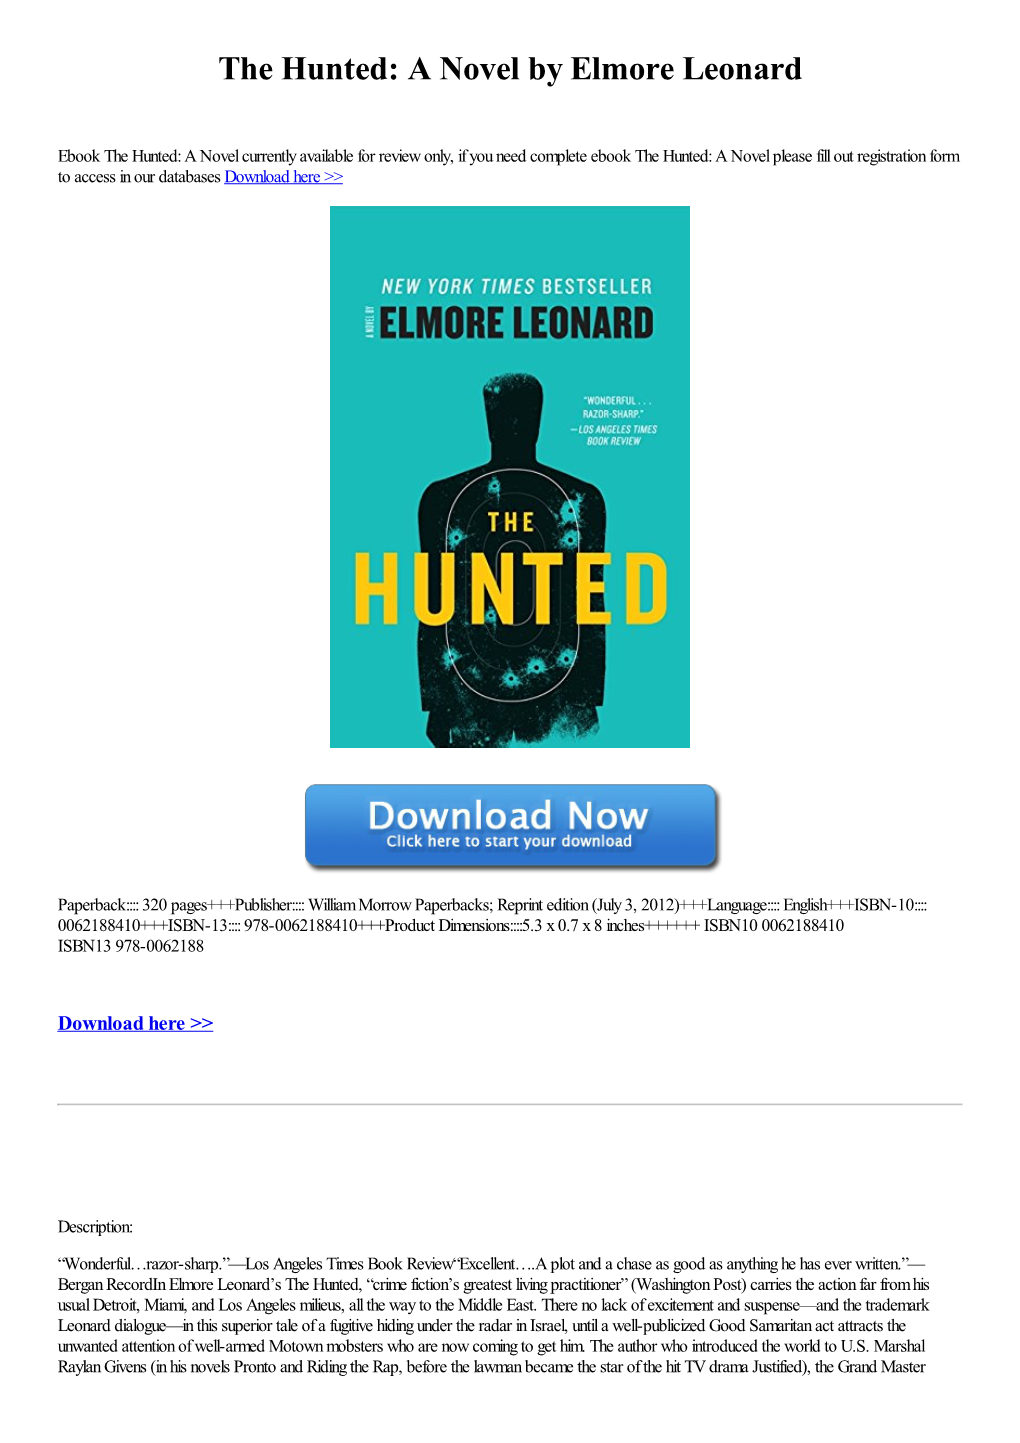 The Hunted: a Novel by Elmore Leonard